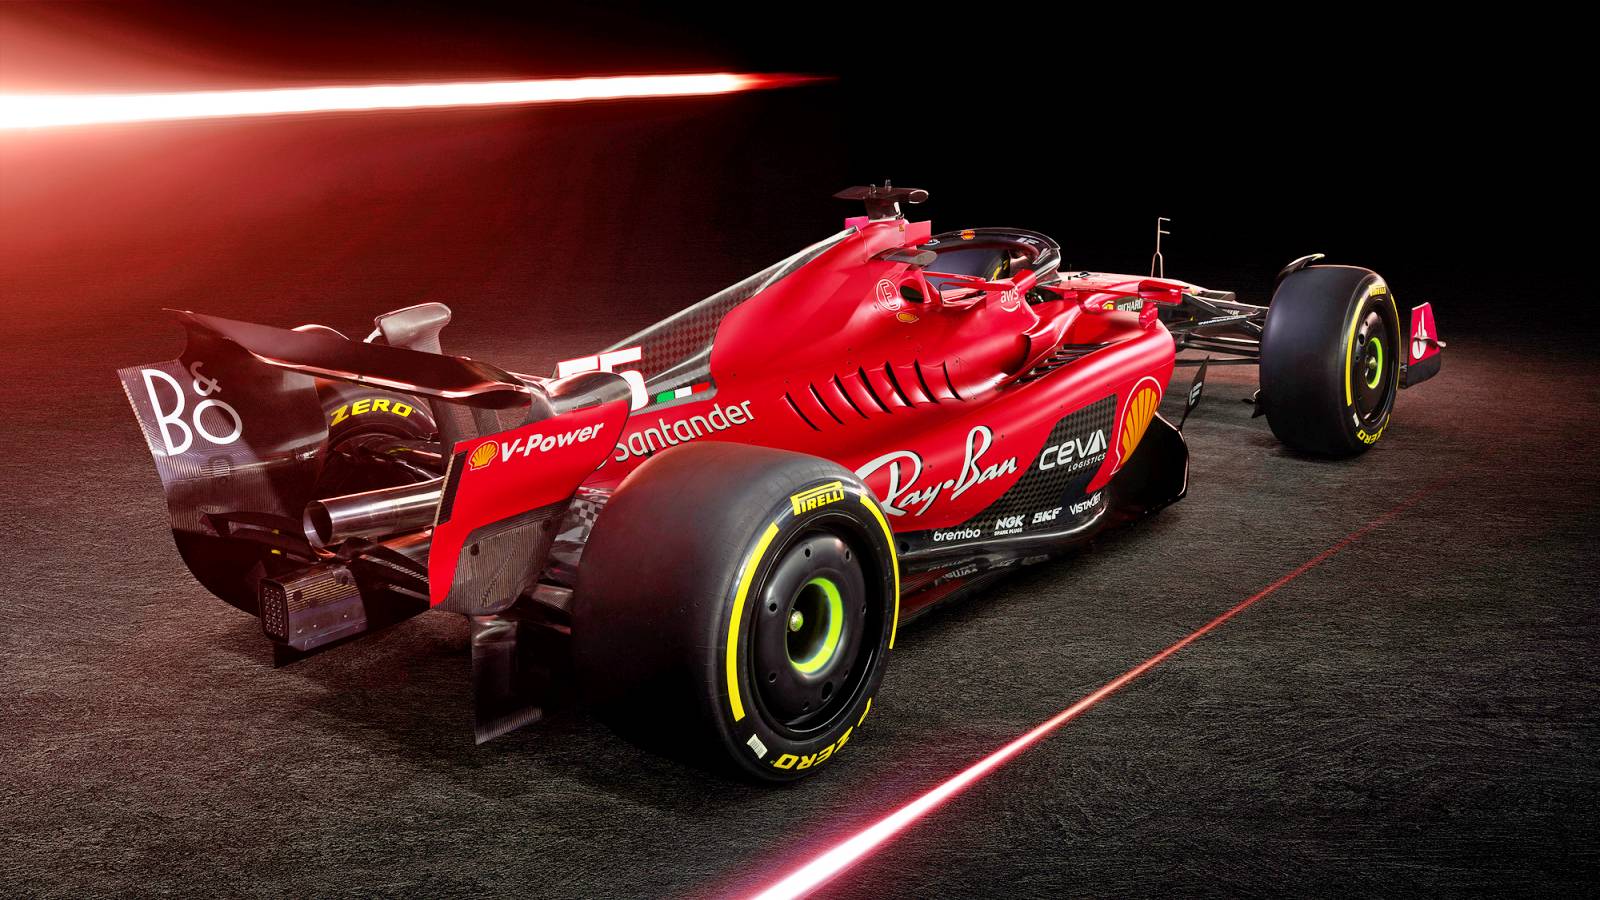 Bang & Olufsen Incheie un parteneriat cu Scuderia Ferrari pentru sezonul 2023 de Formula 1